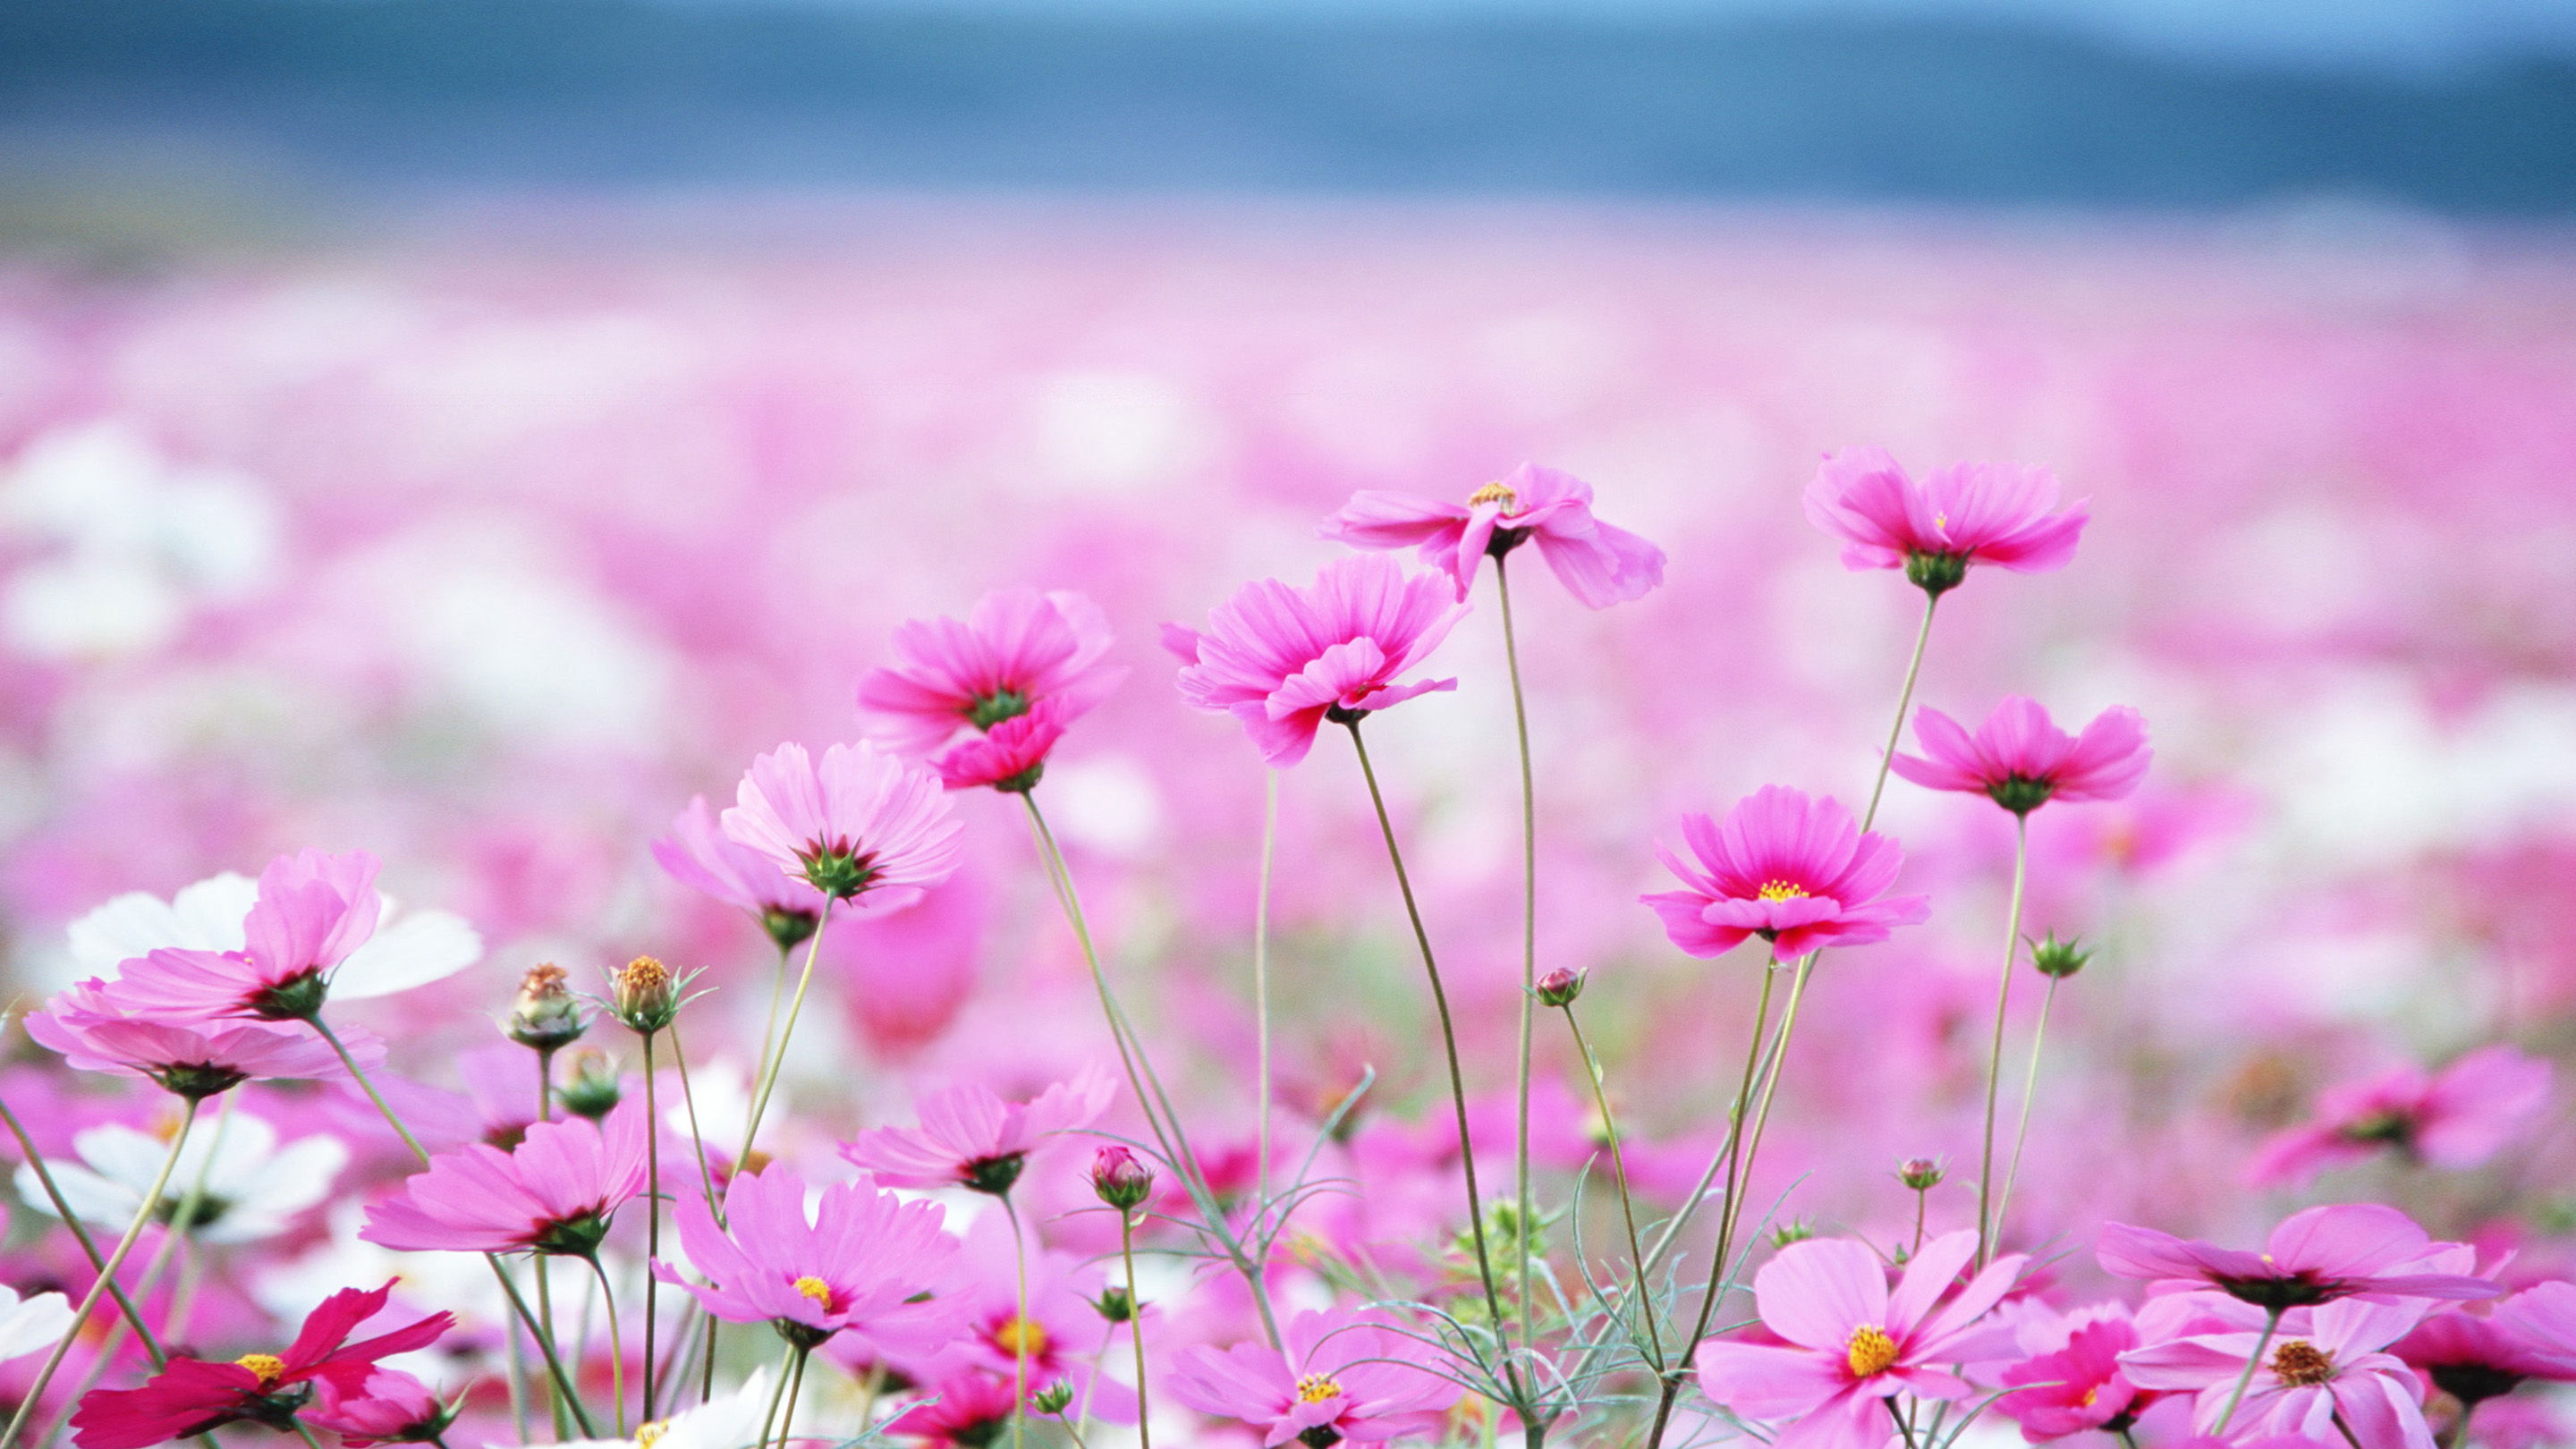 Summer Flowers Pink Daisy Desktop Wallpaper Backgrounds Free Download  2880x1620 : 